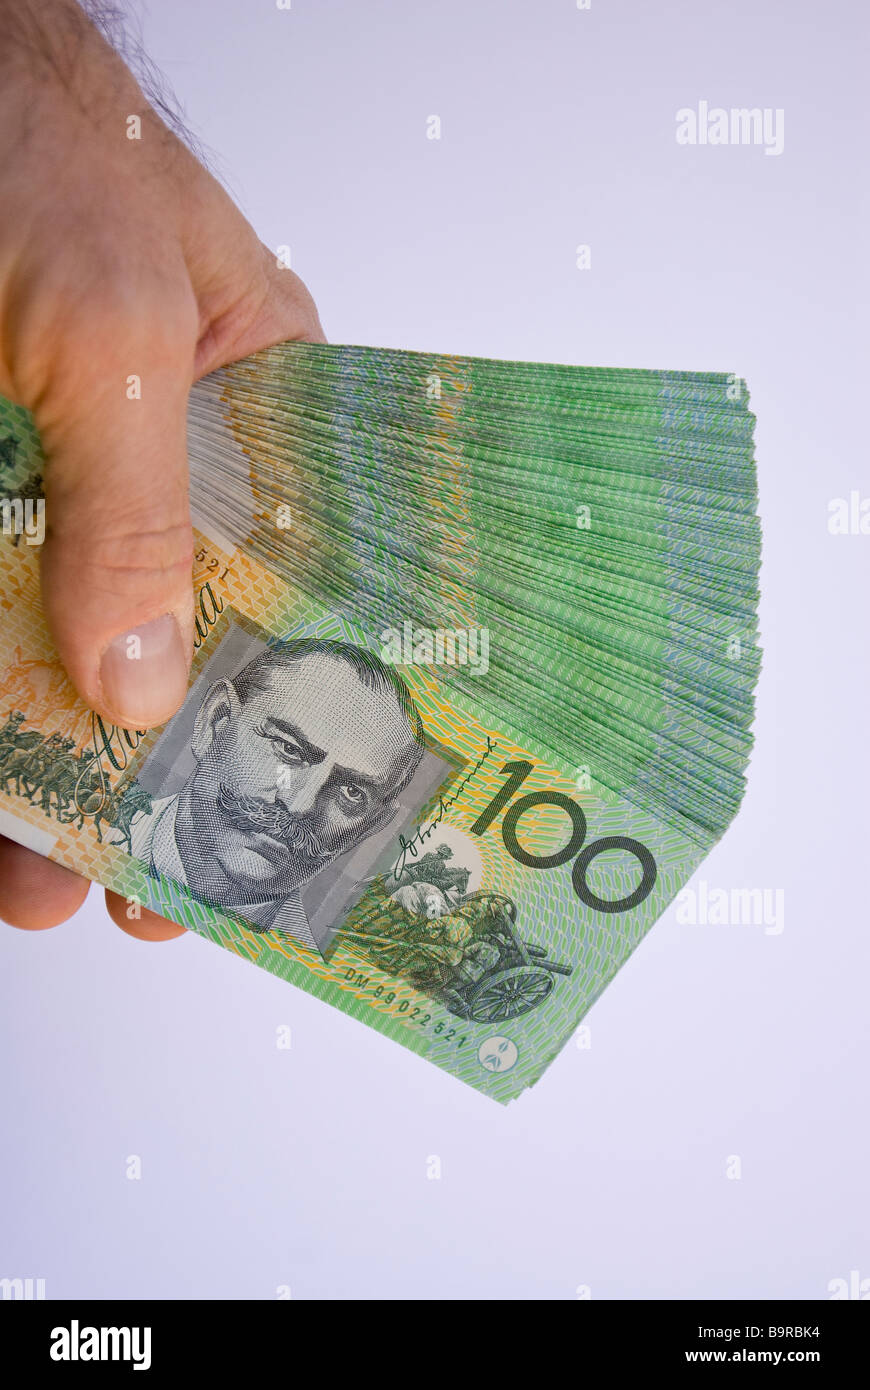 A fan of A$20,000 $20,000 twenty thousand Australian dollars in a hand Stock Photo - Alamy